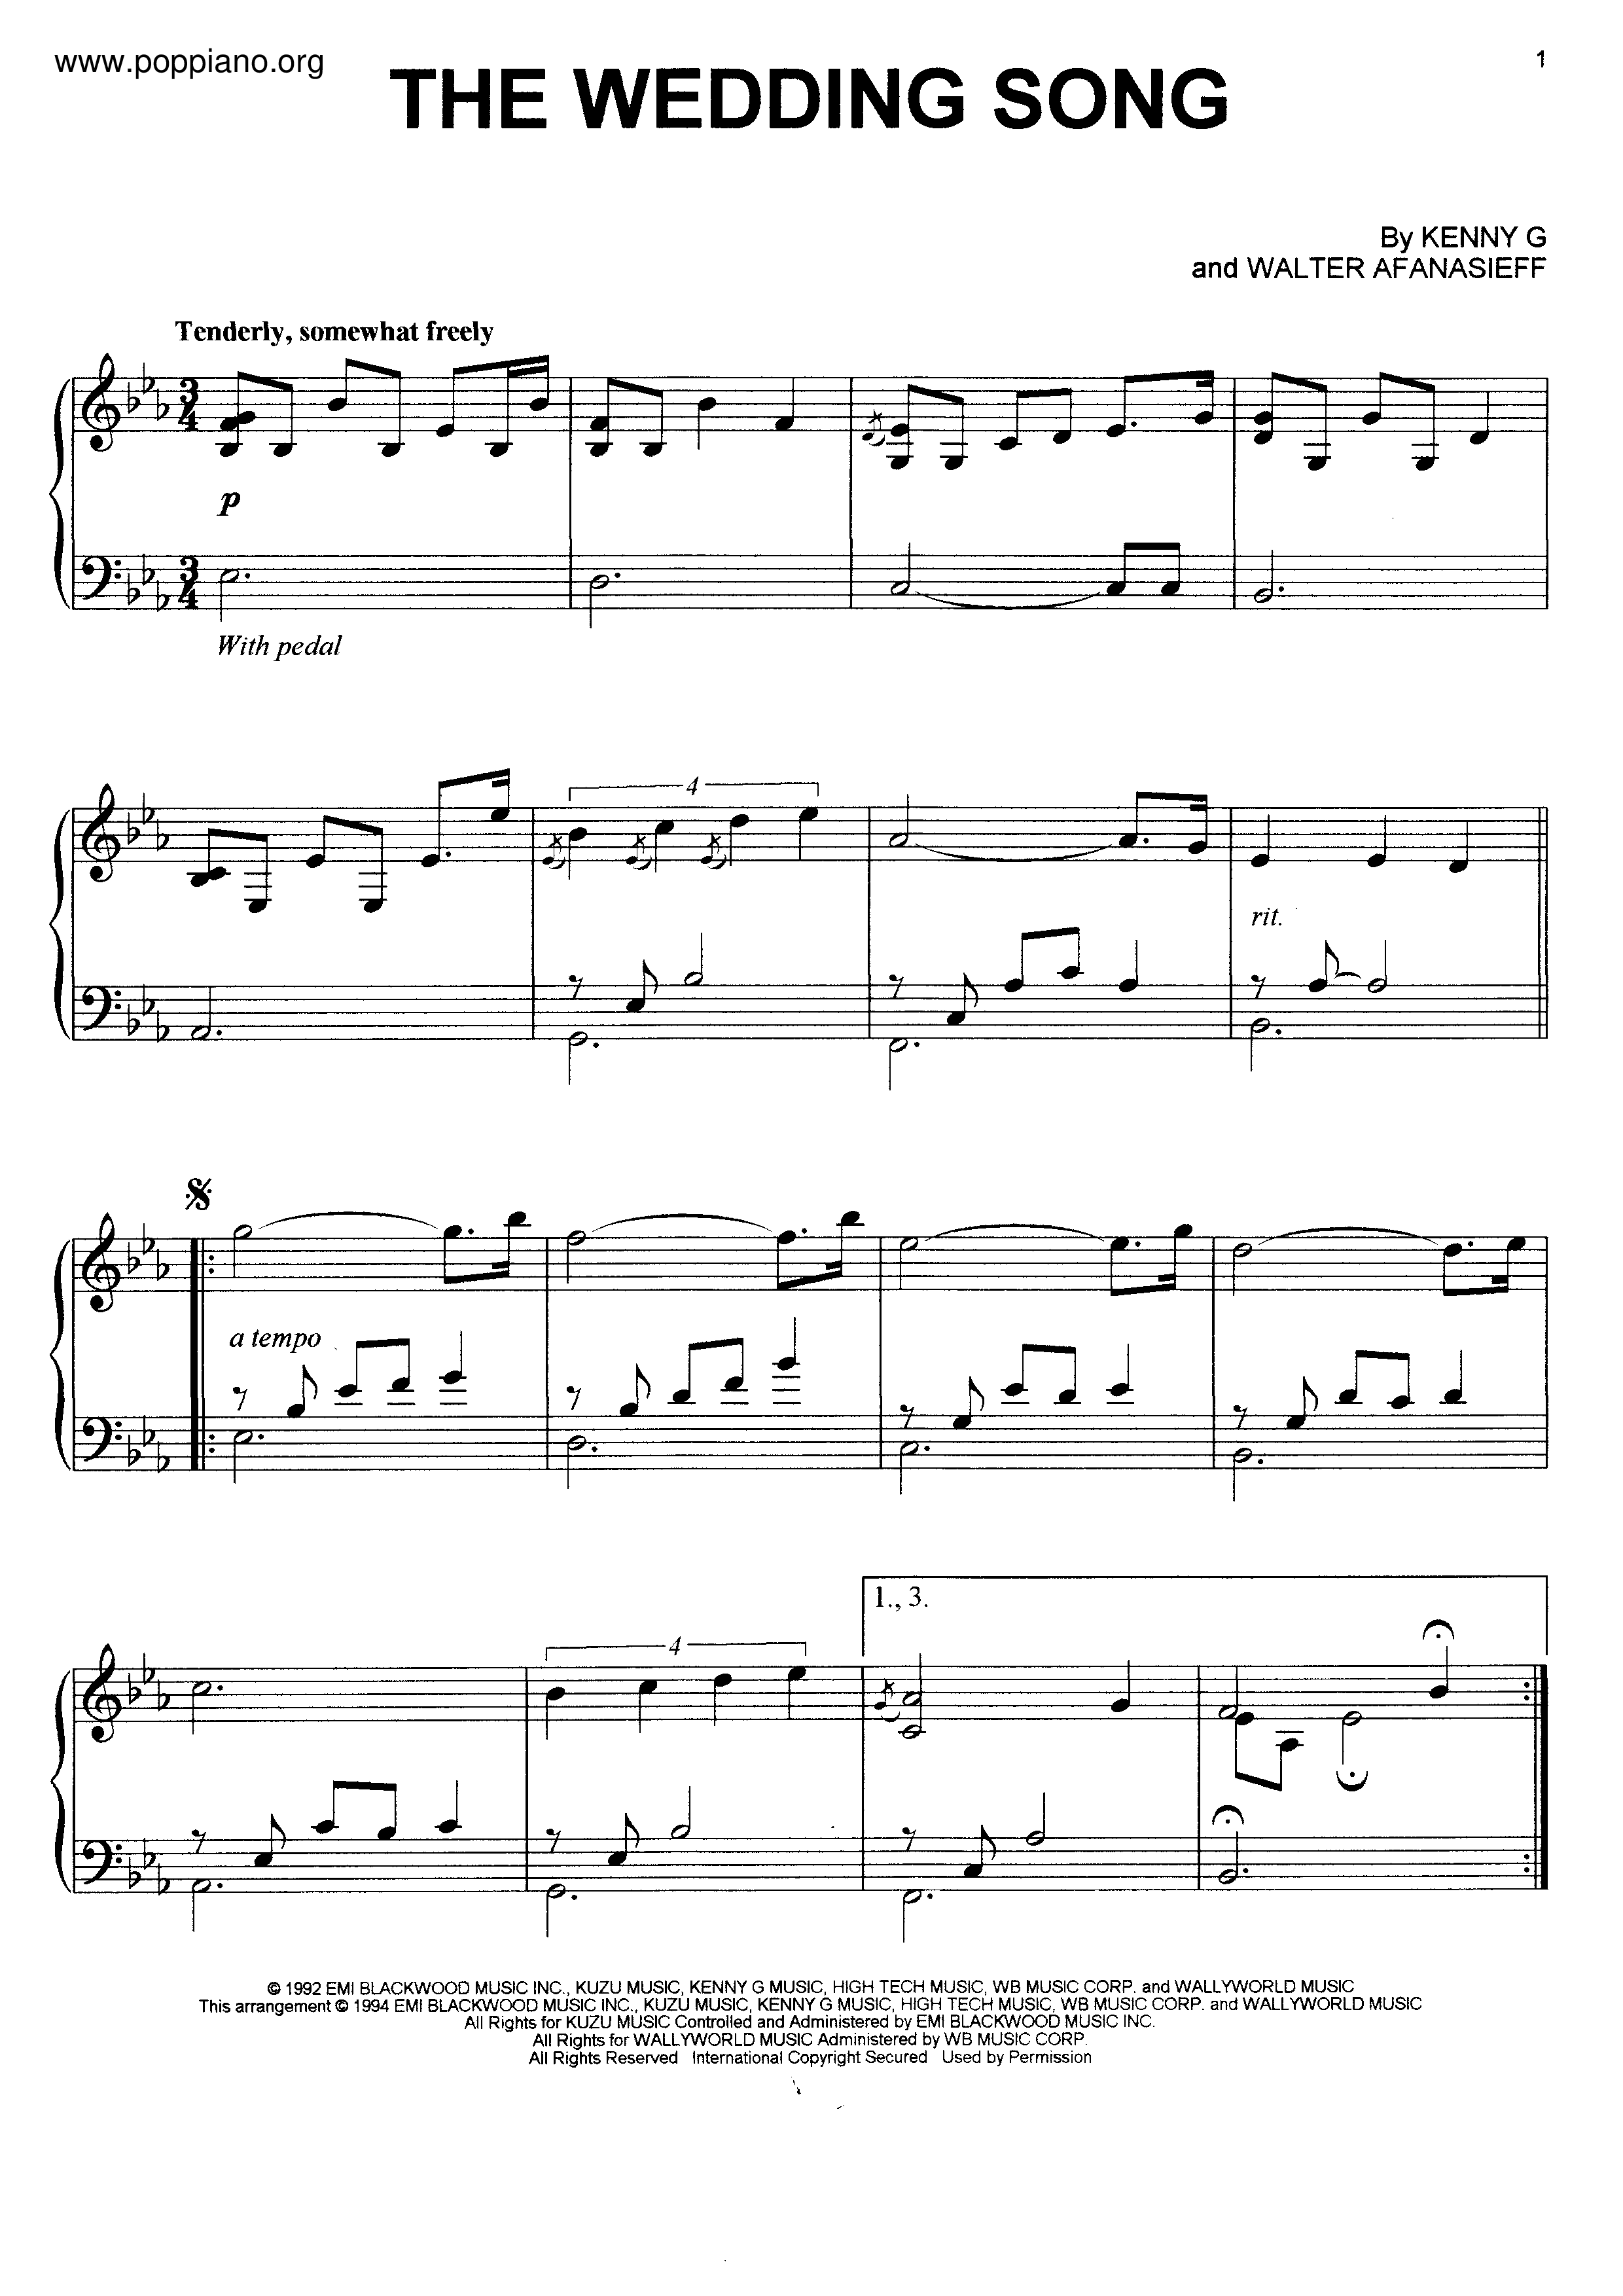 The Wedding Song Score